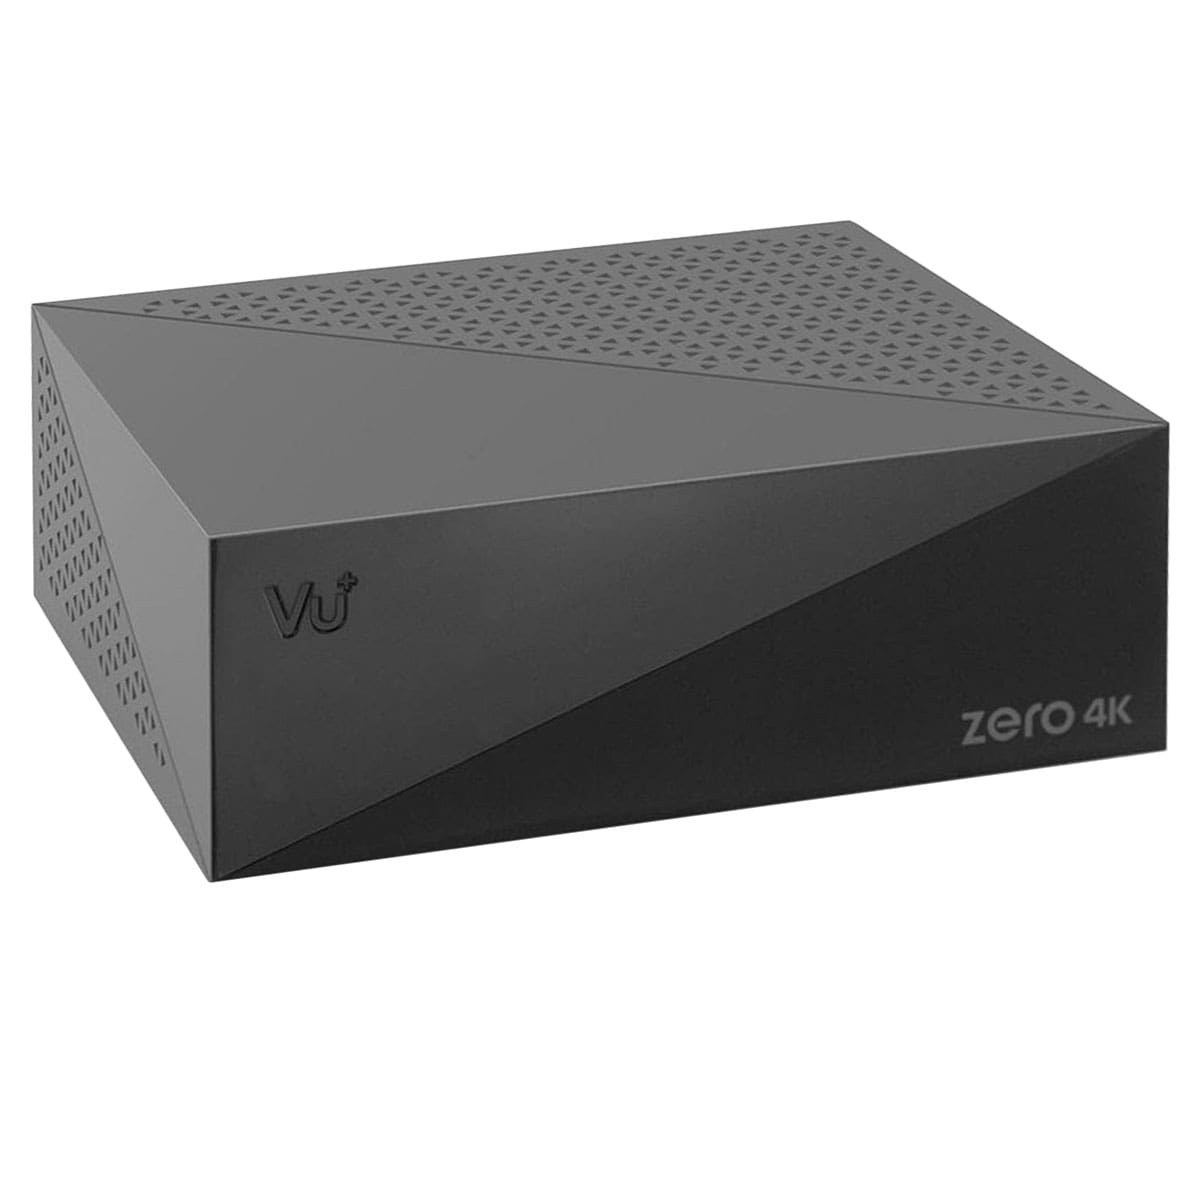 VU+ Zero 4K (Schwarz) Receiver PVR-Kit inkl. DVB-C/T2 4K 500GB Kabel